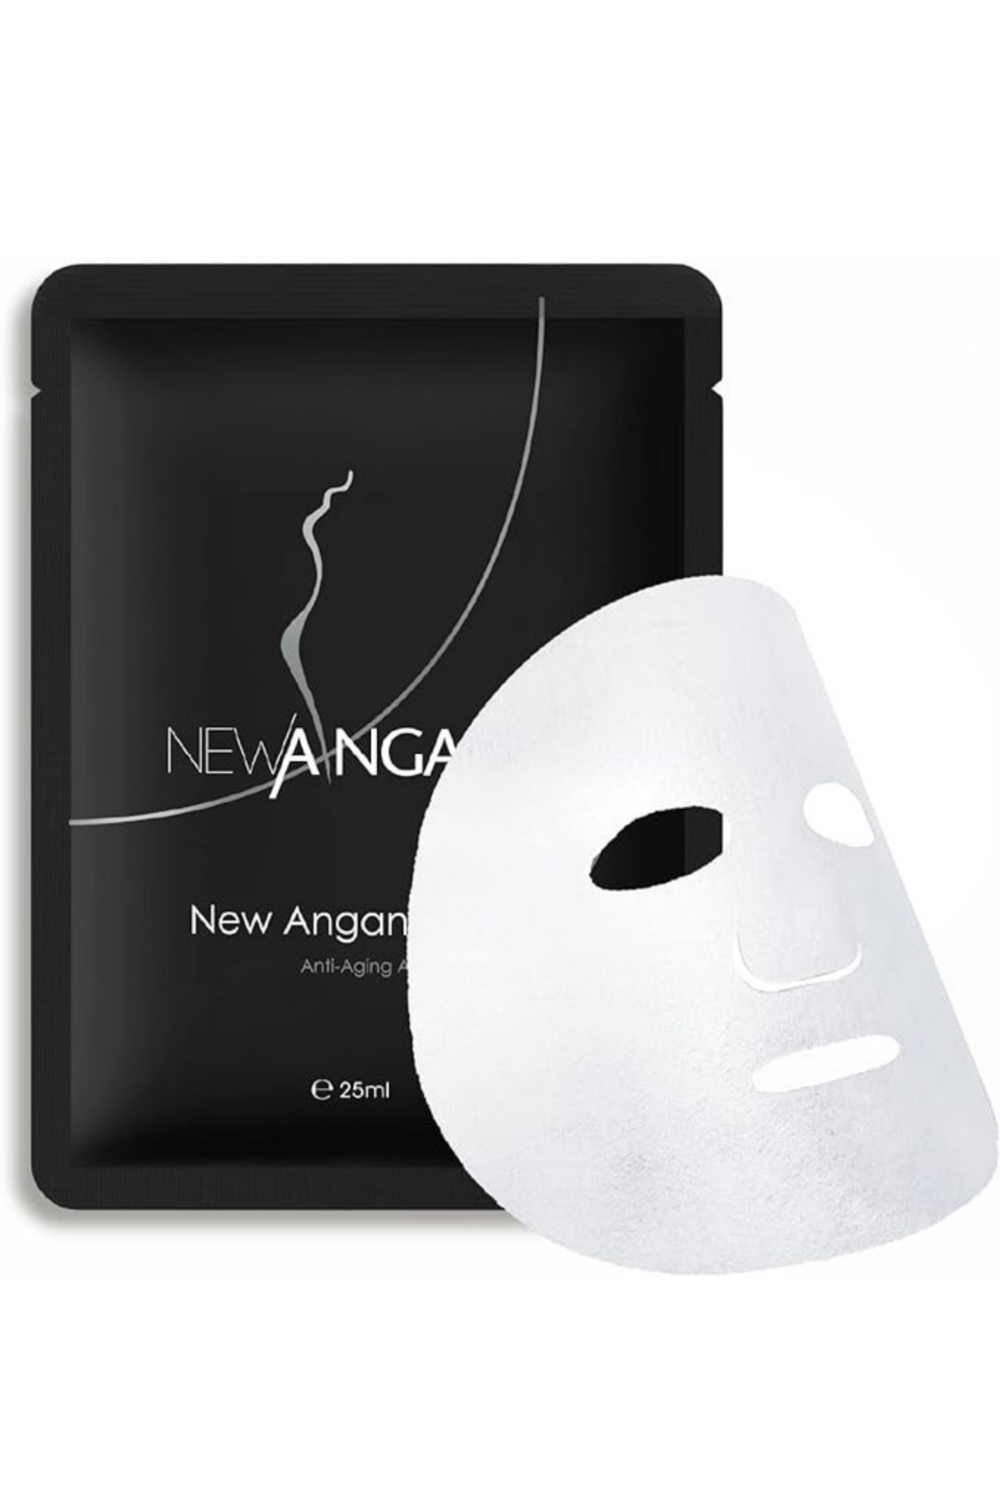 New angance - Masque en tissu anti-âge